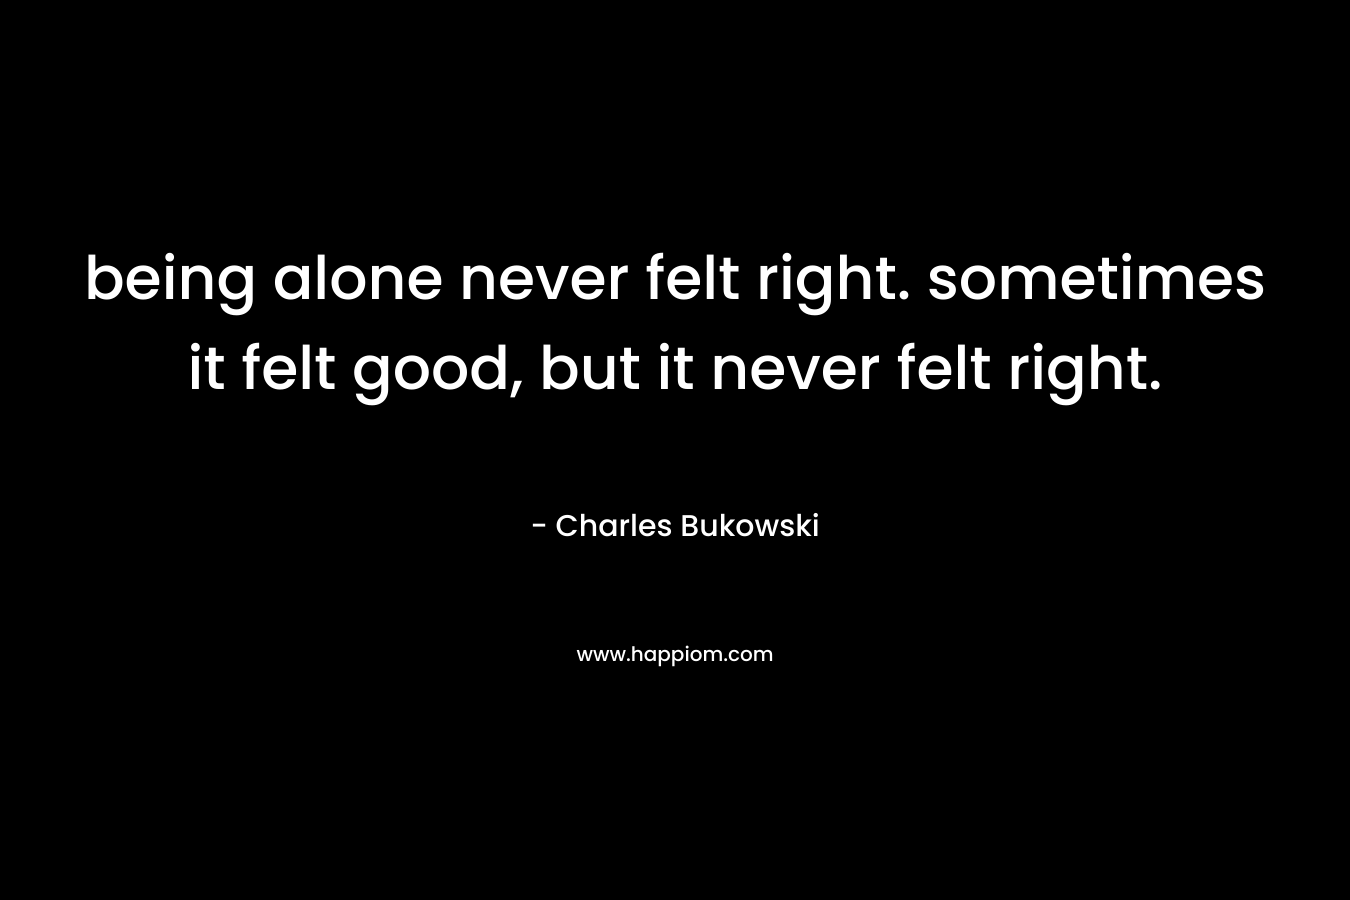 being alone never felt right. sometimes it felt good, but it never felt right.